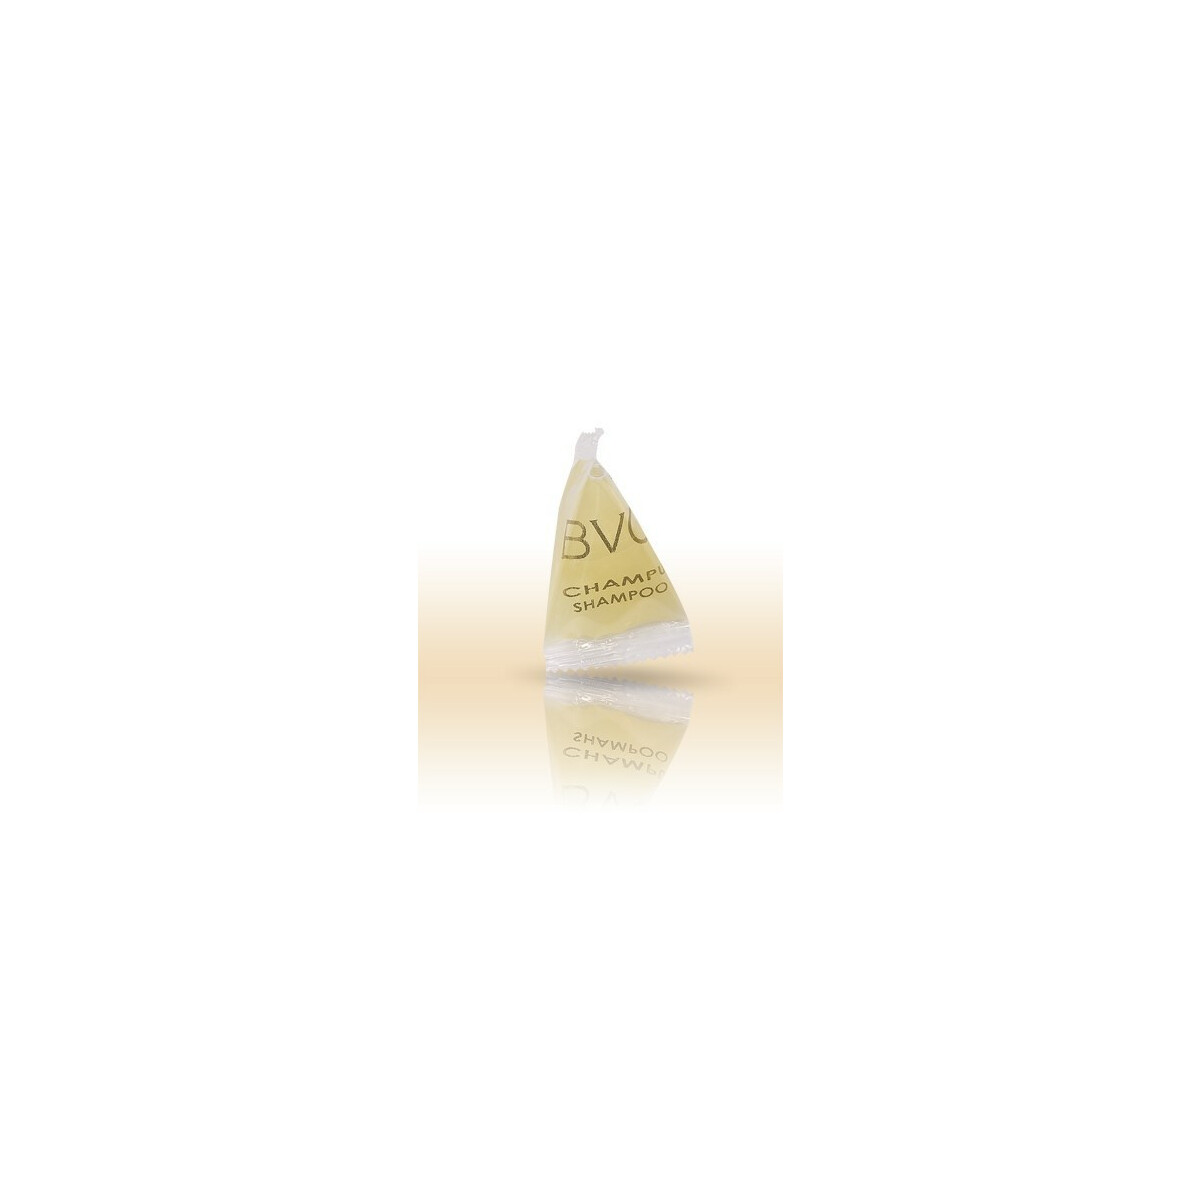 Shampoo with soy and jojoba in a sachet pyramid 15ml